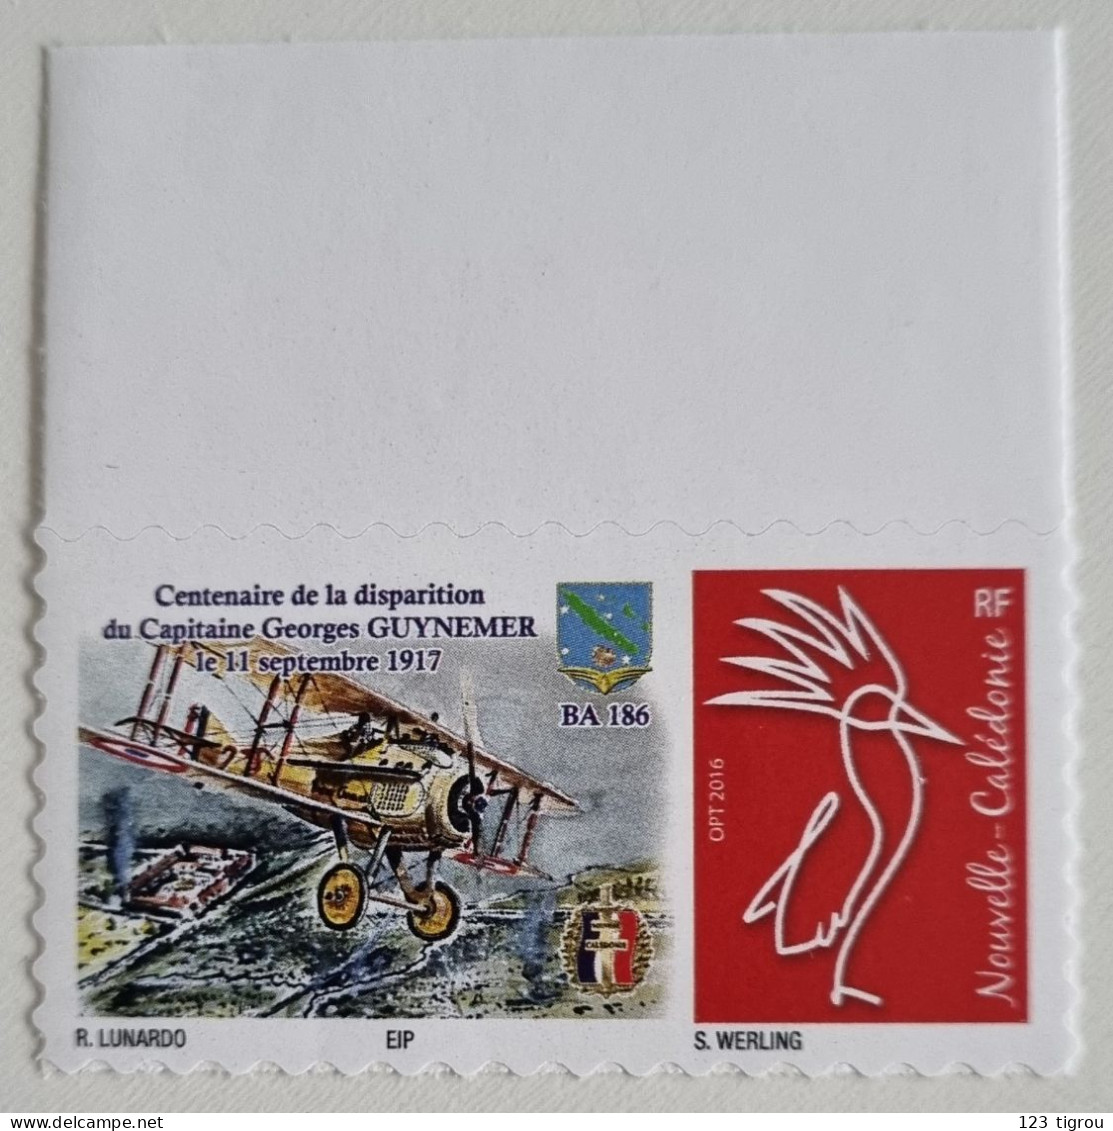 CAGOU PERSONNALISE LOGO GUYNEMER DE LUNARDO 2017 - Unused Stamps